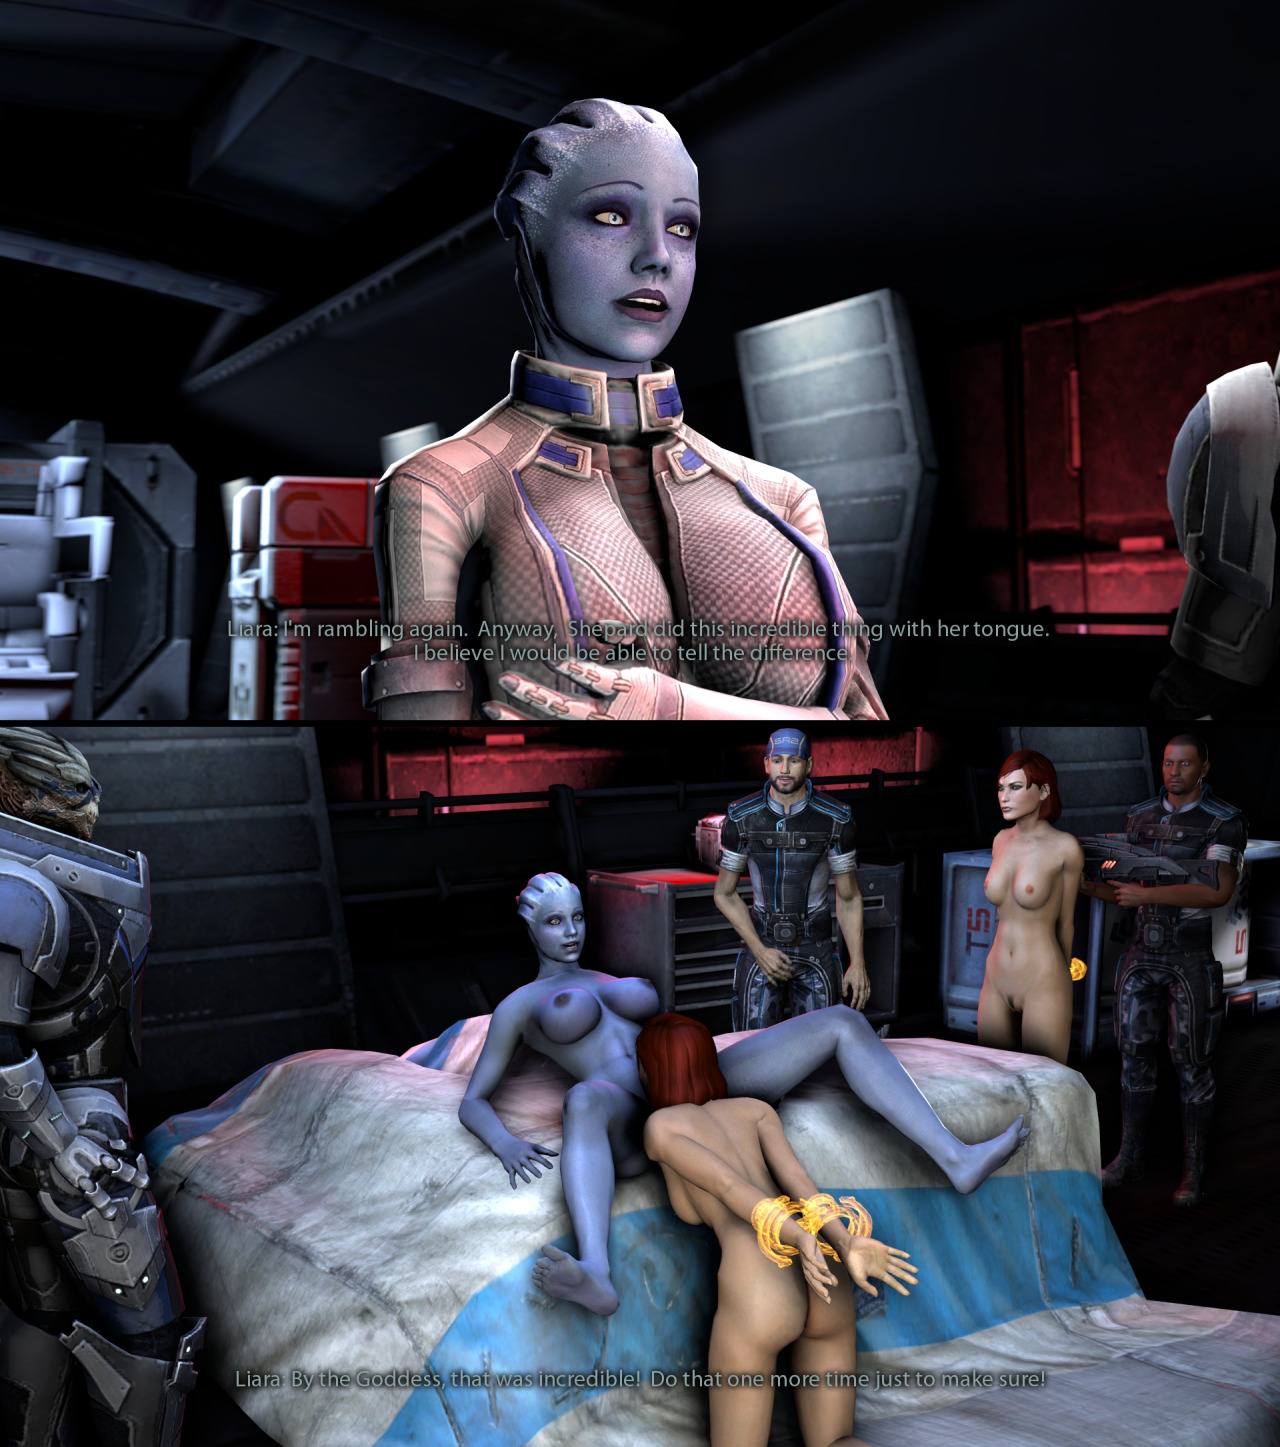 Mass Effect 3: ExtortionChapter 7: Shuttle Bay, Normandy SR-21920 x 1080 renders: